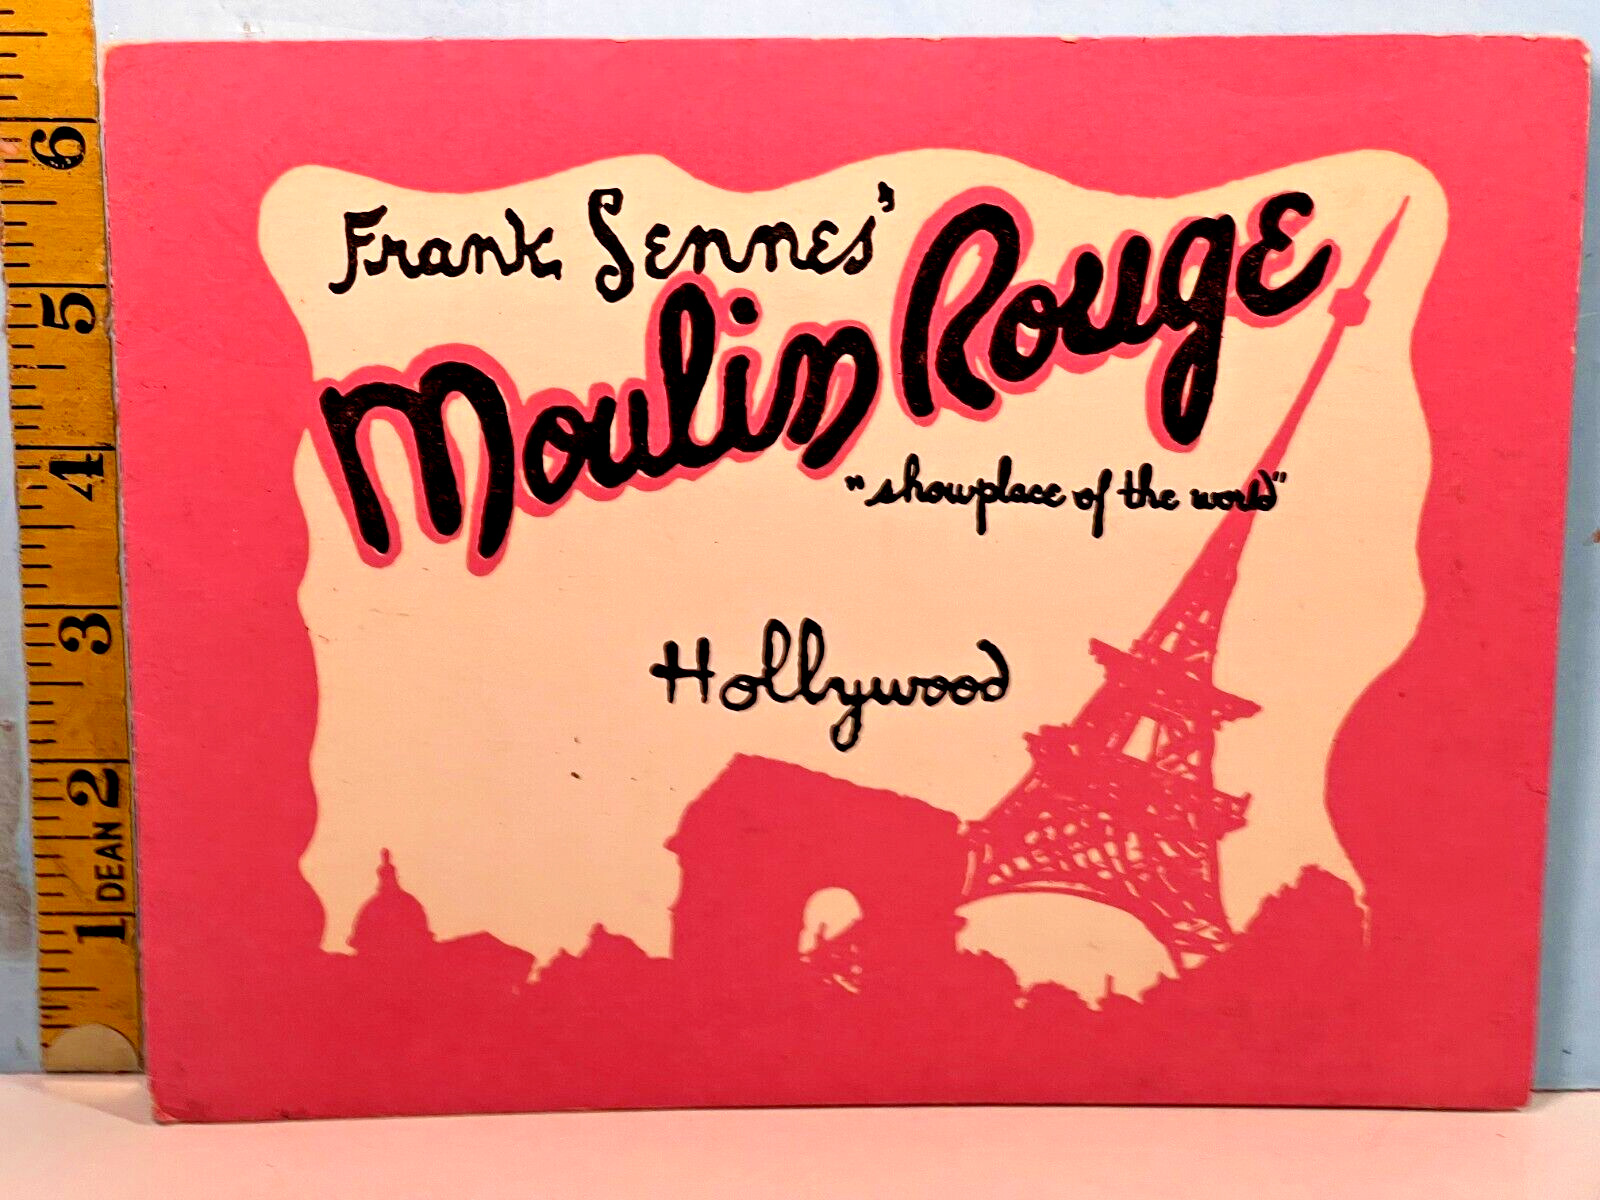 1957 Frank Sennes' Moulin Rouge Hollywood Showplace of The World Lounge Photo